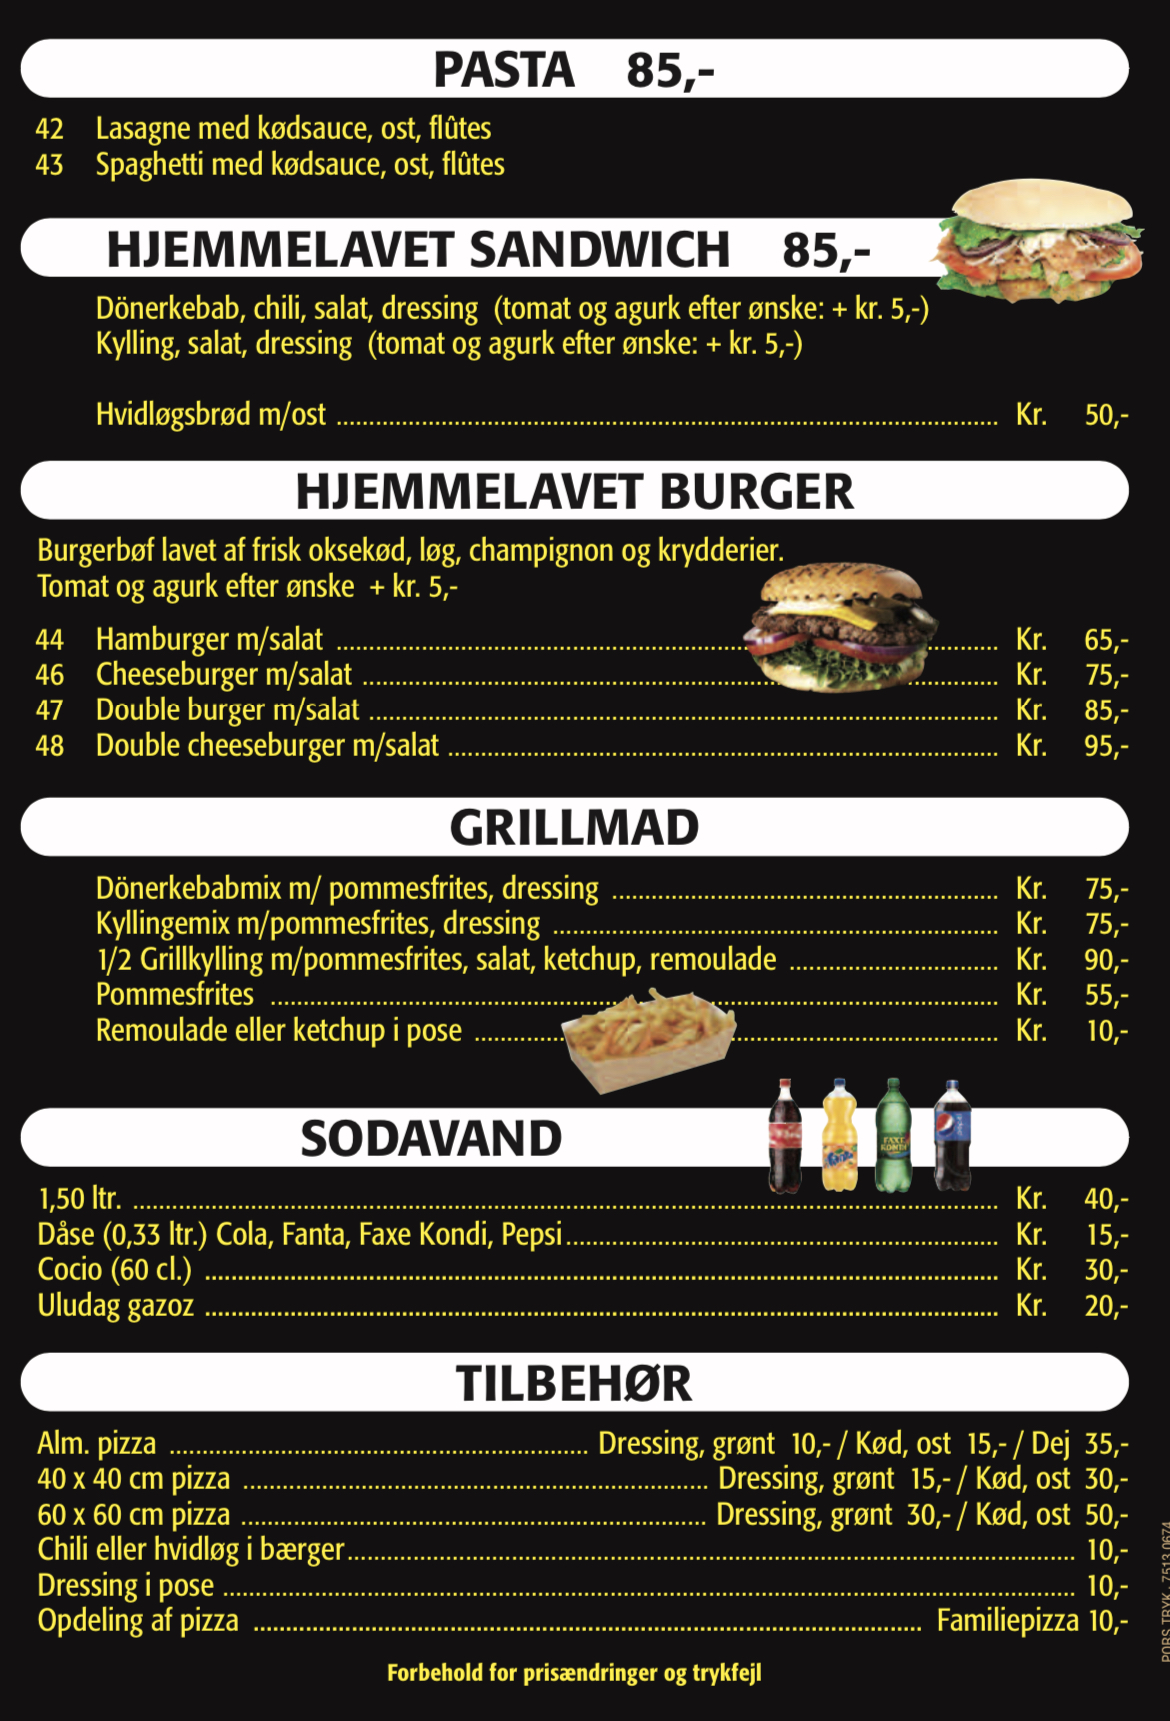 Pasta, sandwich, burger, grillmad, sodavand & tilbehørs menu